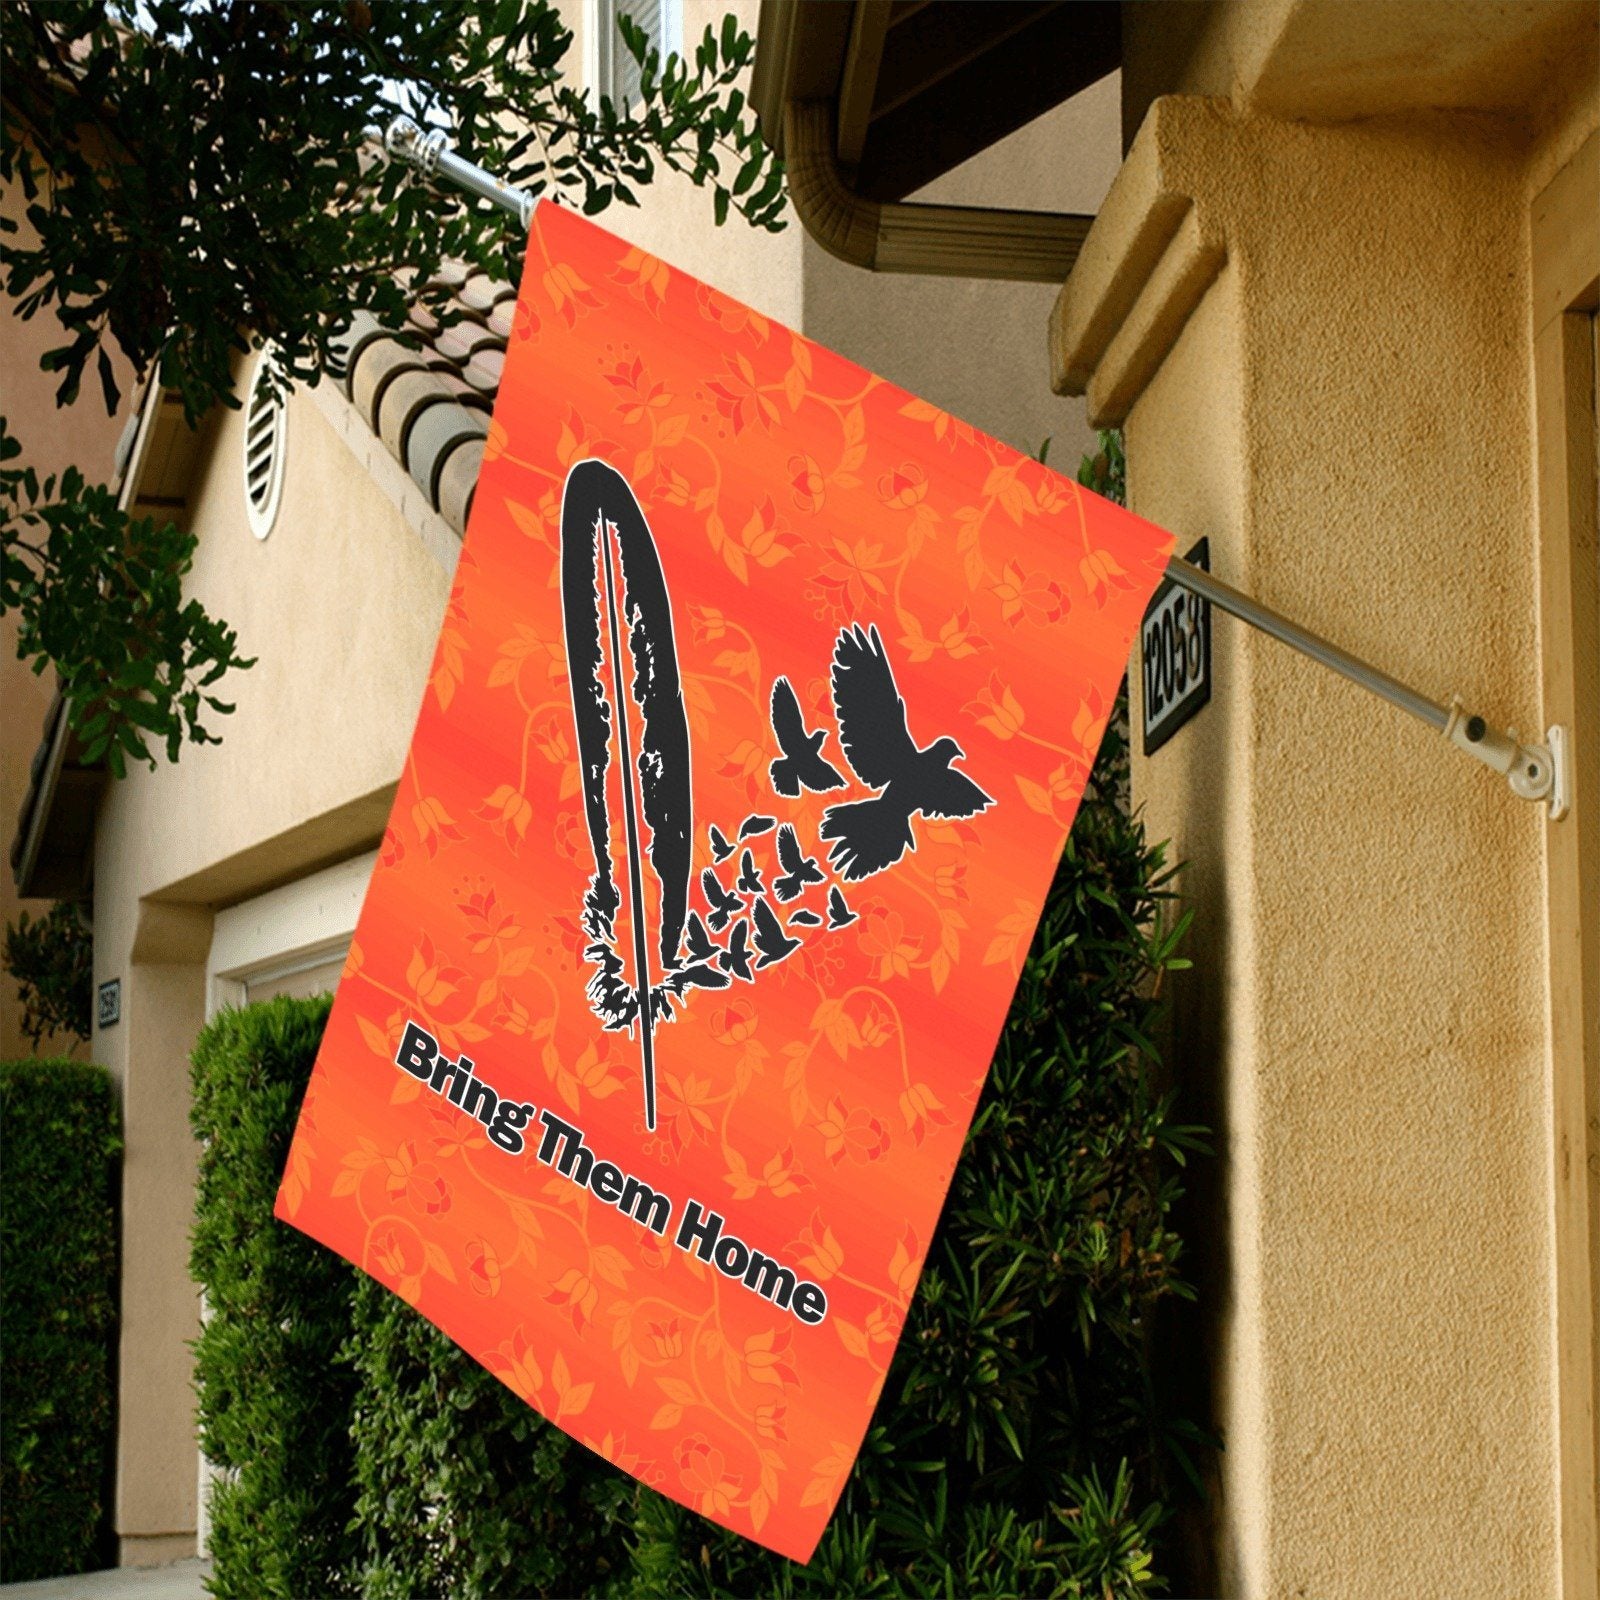 Orange Days Orange - Bring Them Home Feather with Doves Garden Flag 36''x60'' (Two Sides Printing) Garden Flag 36‘’x60‘’ (Two Sides) e-joyer 